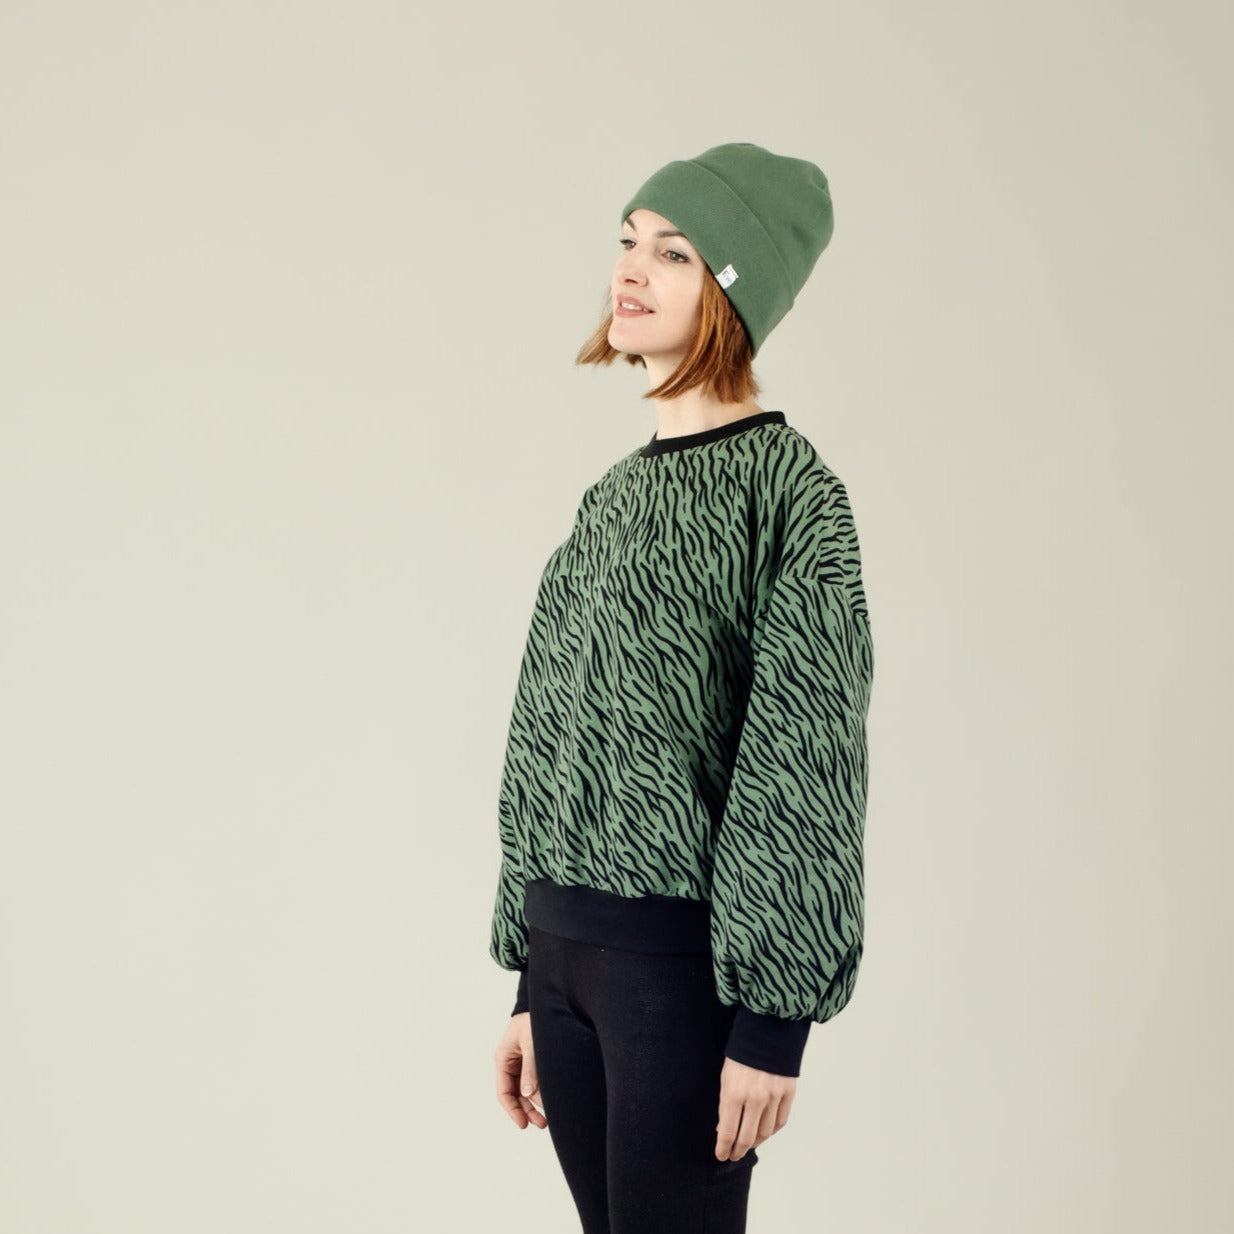 Damen Sweater Bio Baumwolle Grün mit Zebramuster; Urheber: Mini & Eve